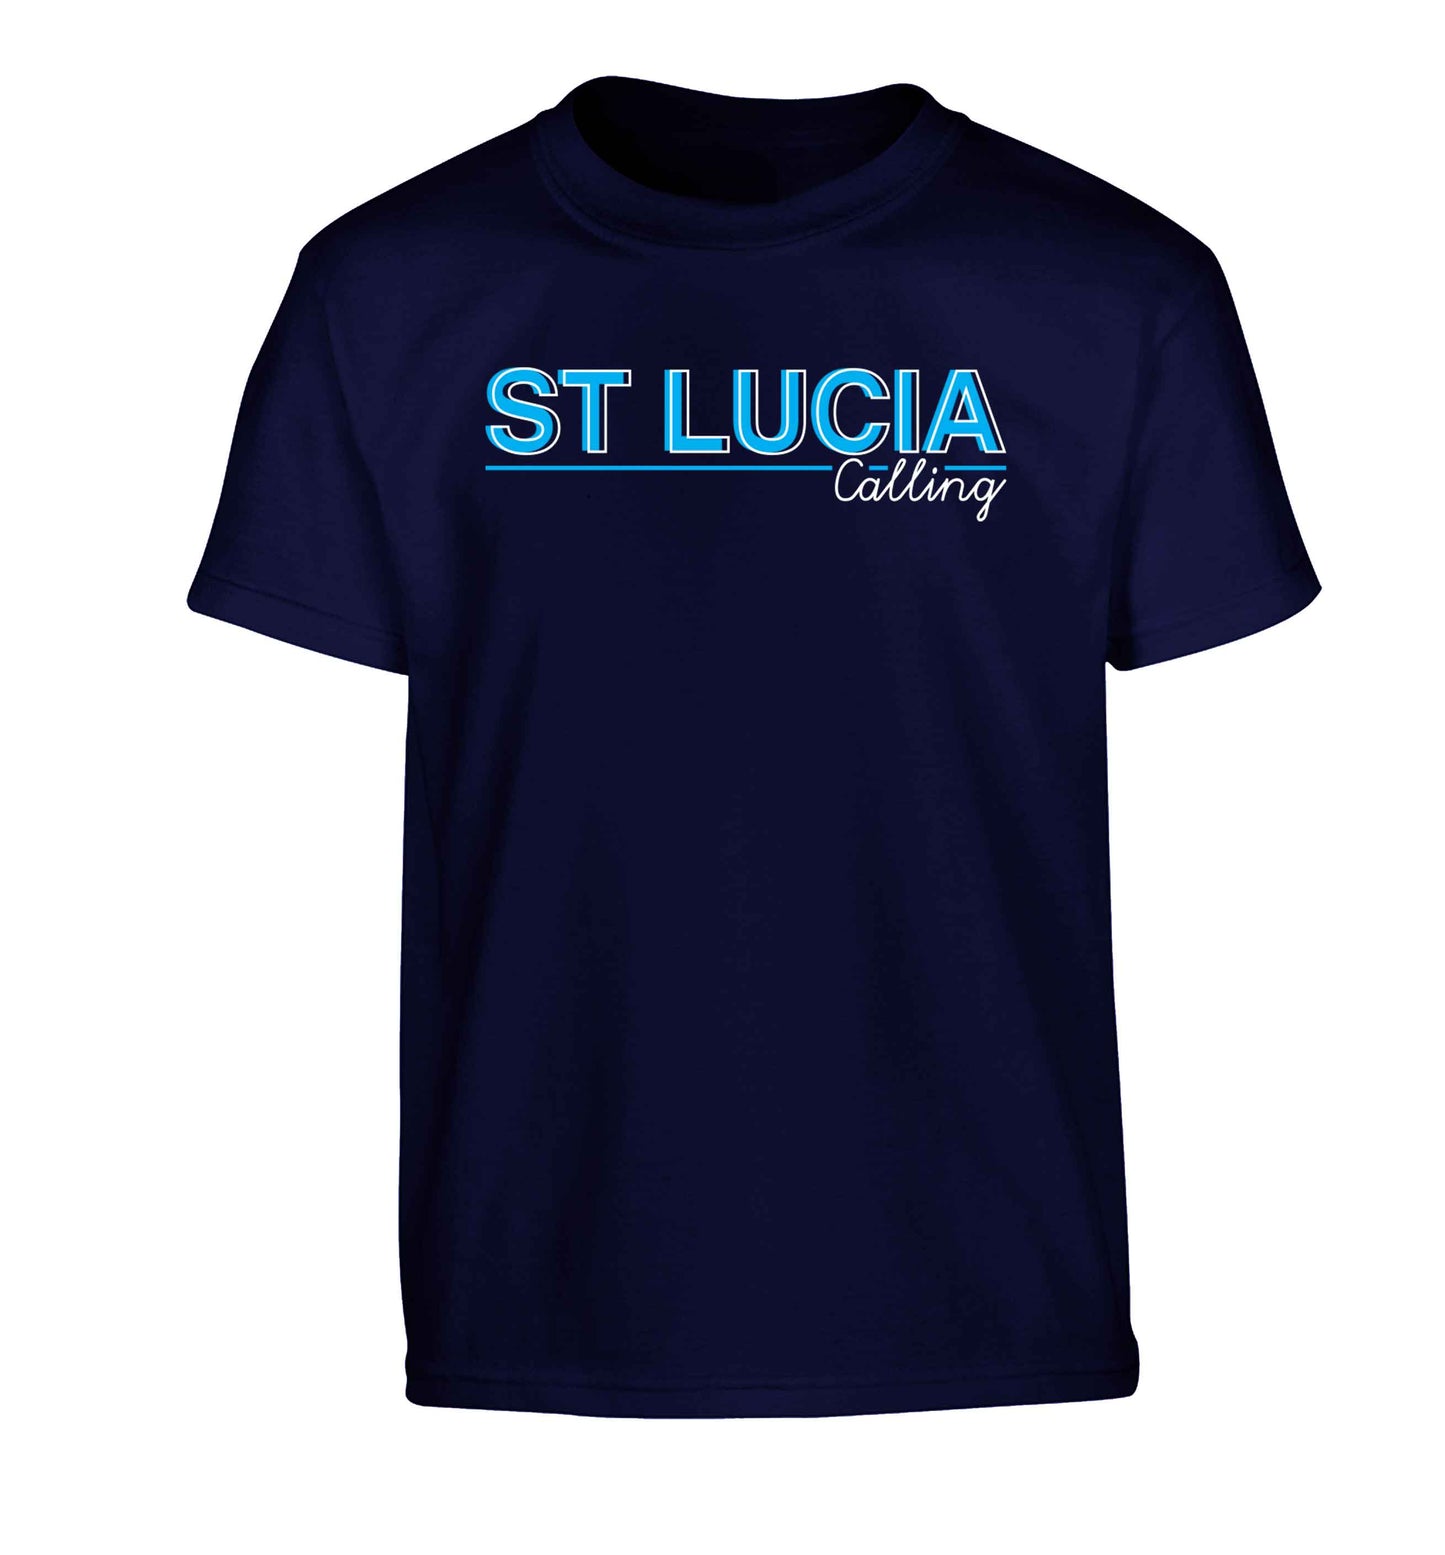 St Lucia calling Children's navy Tshirt 12-13 Years